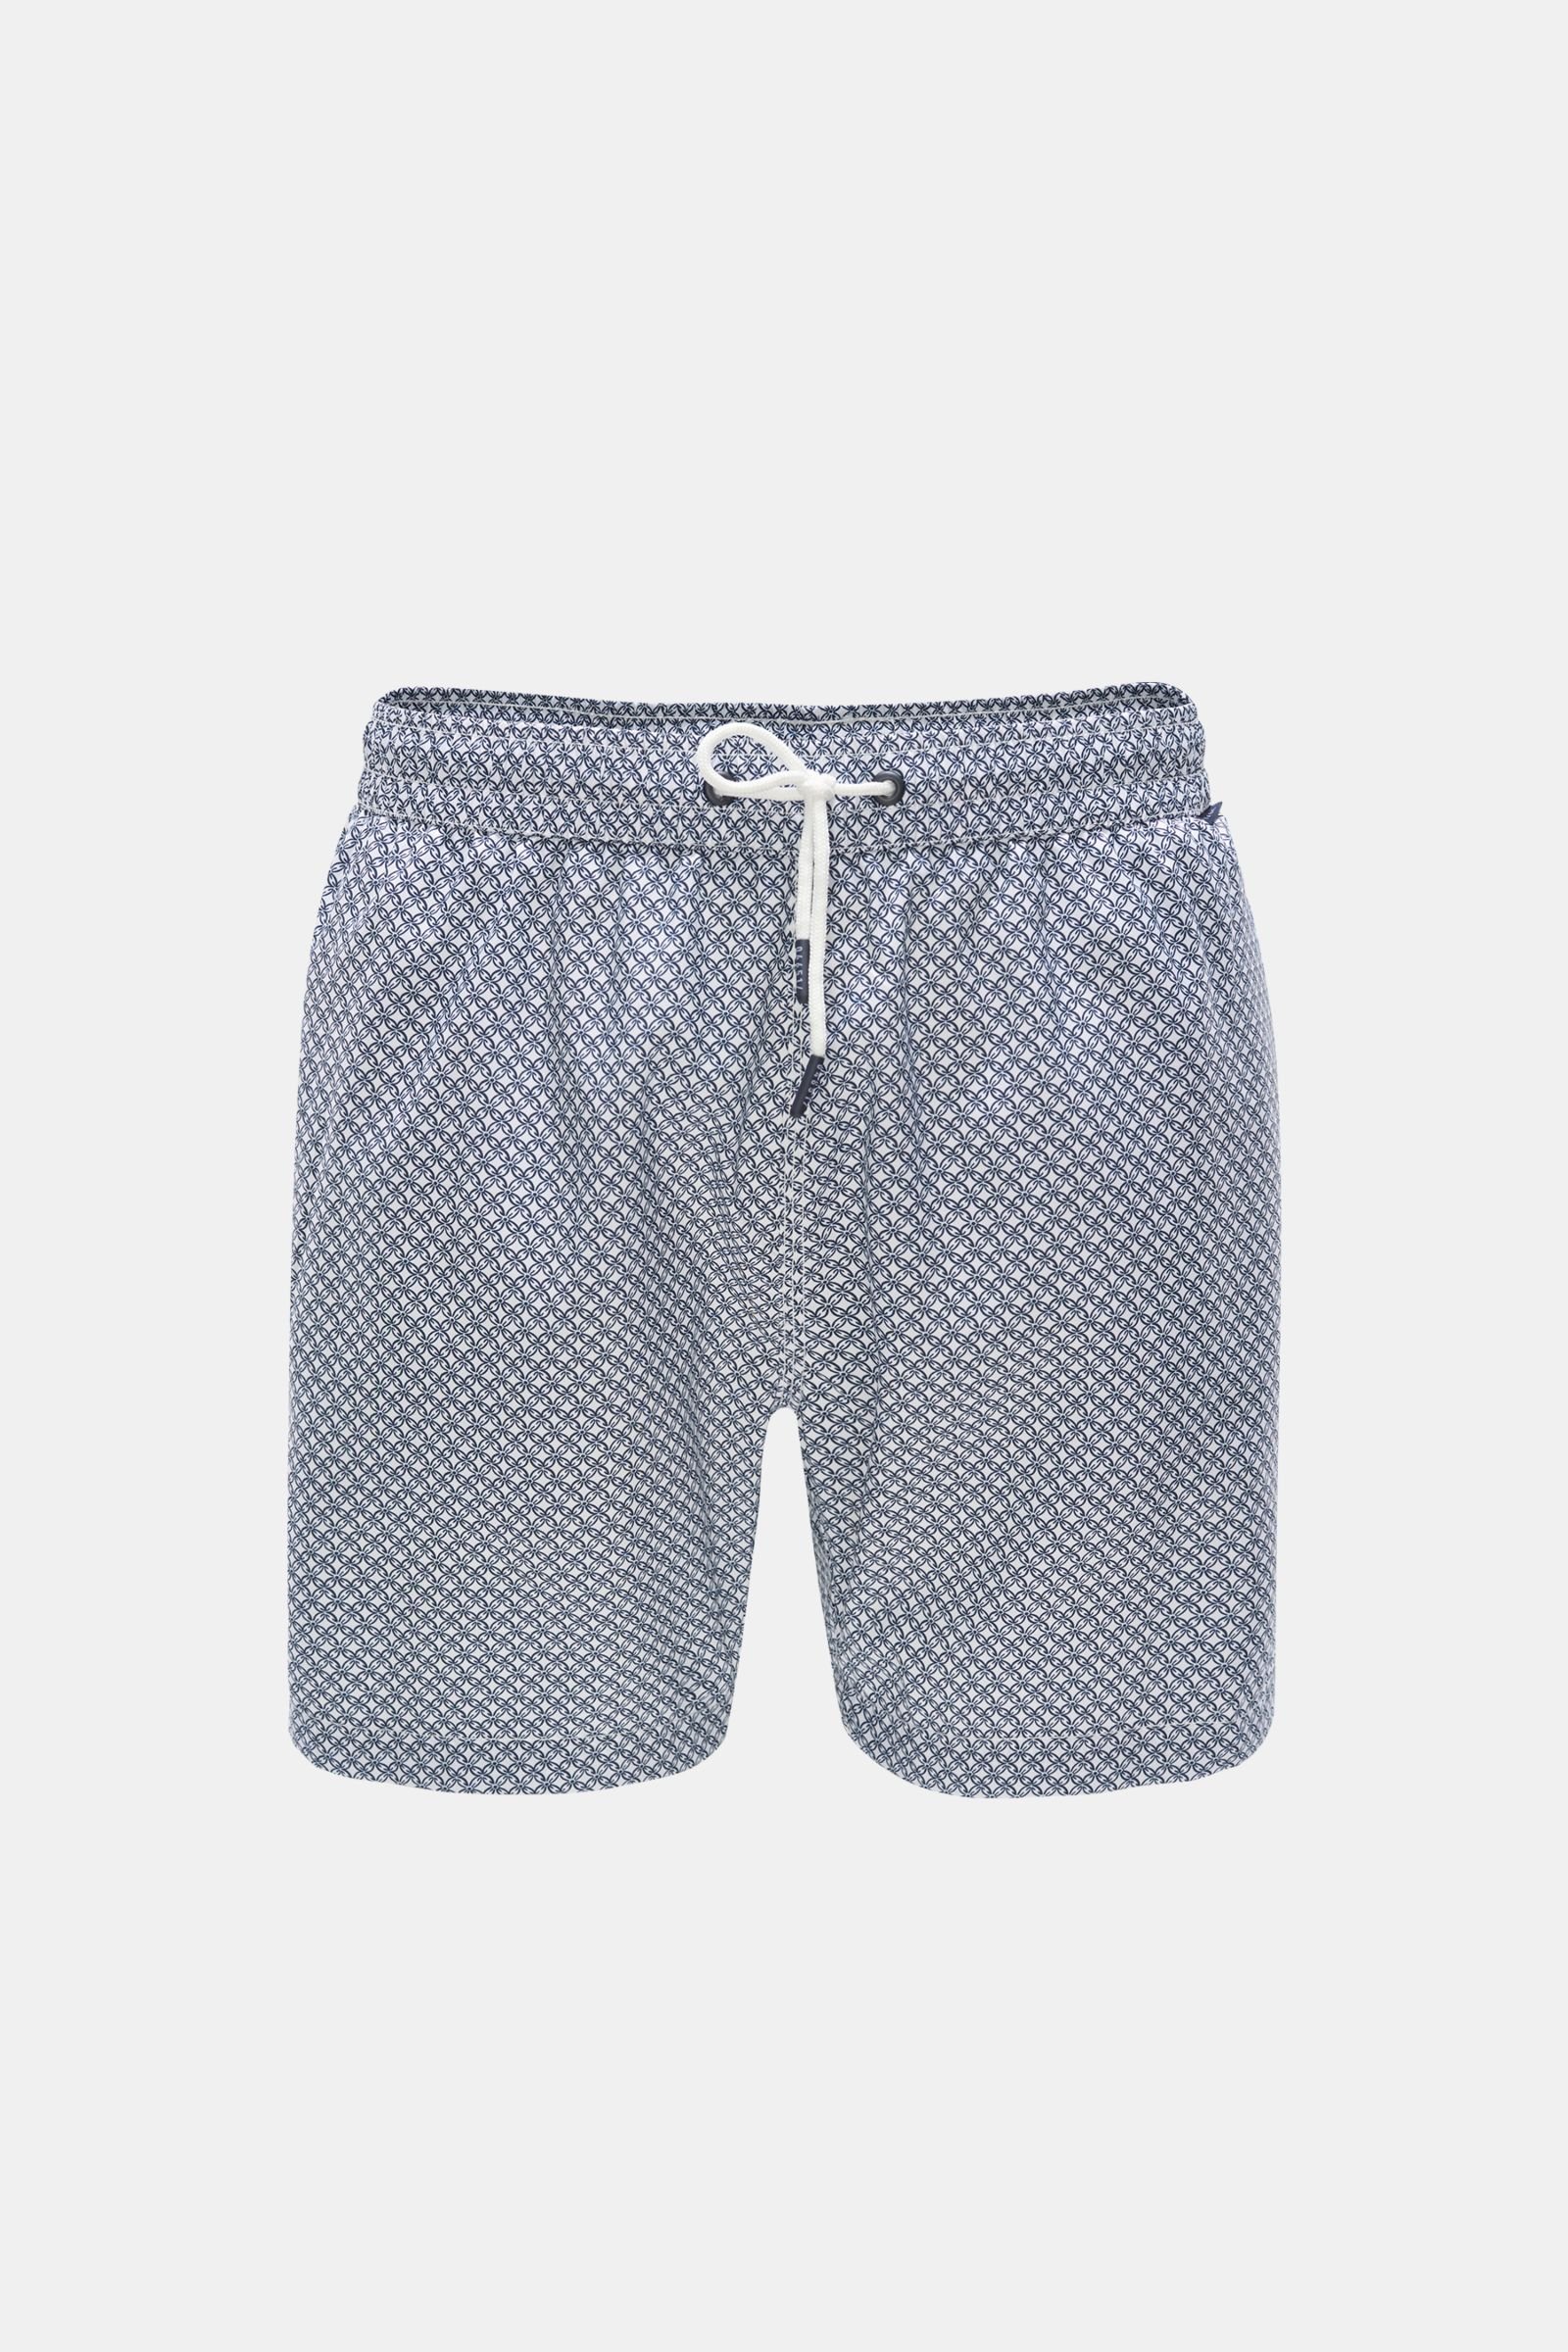 Swim shorts 'Tile Swim' white/navy patterned